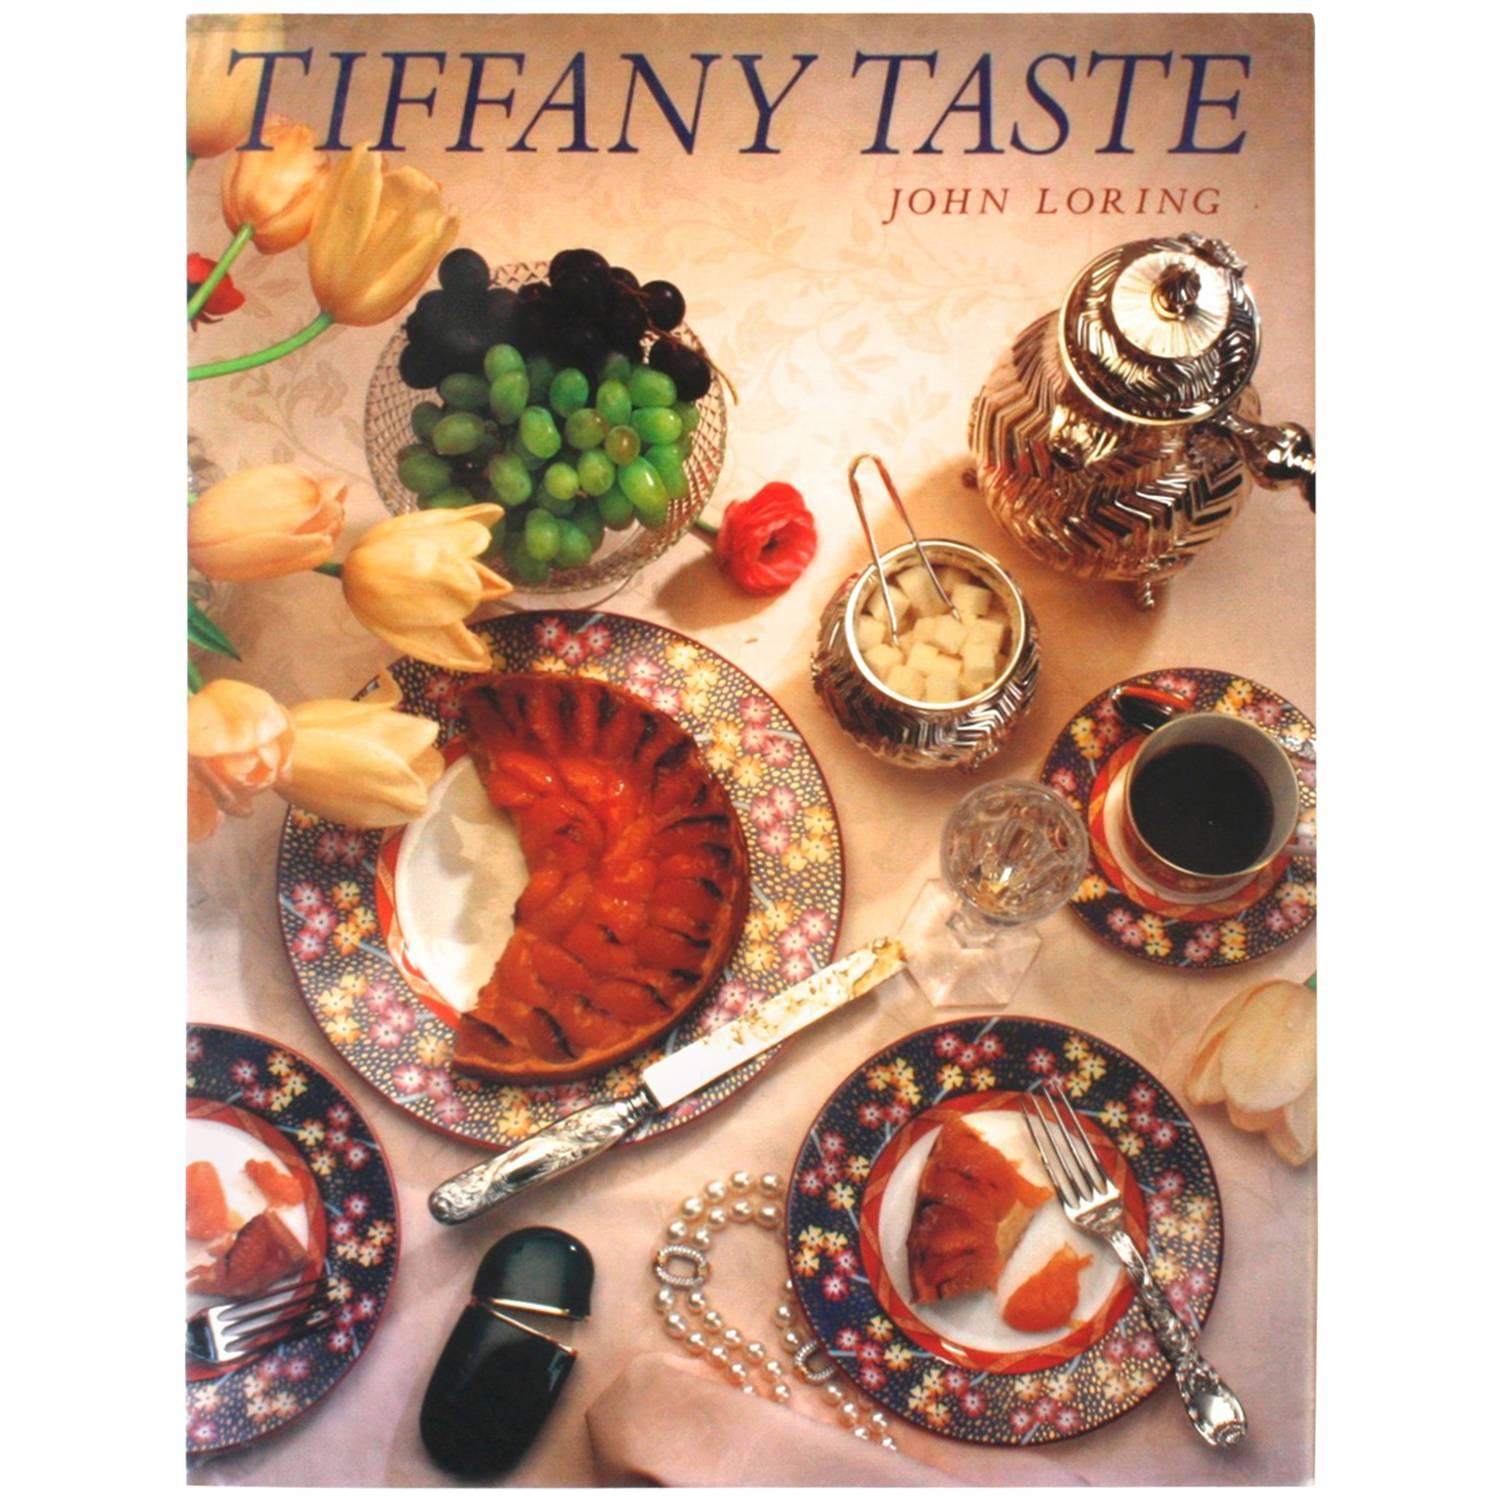 Tiffany Taste by John Loring, First Edition